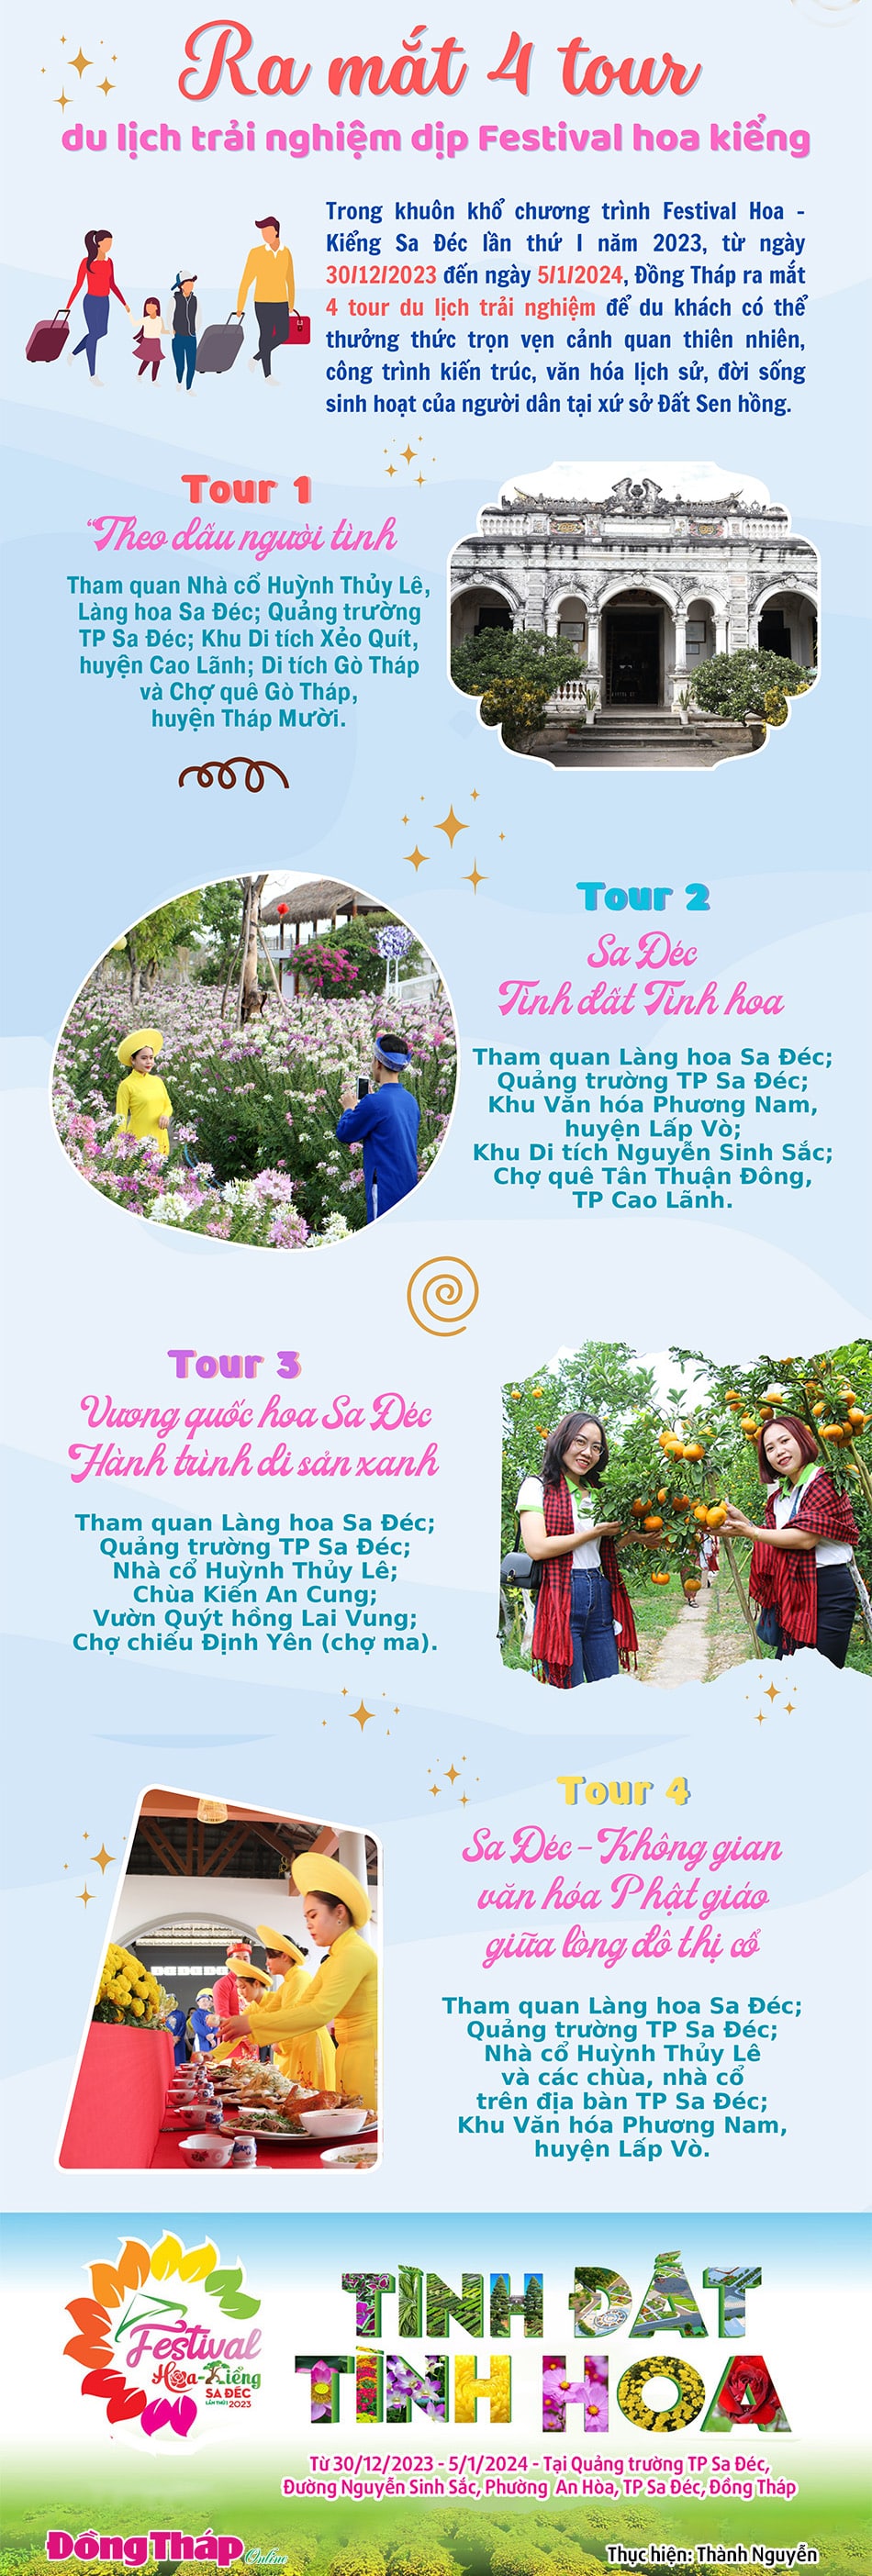 [Infographic] Ra mắt 4 tour du lịch trải nghiệm dịp Festival hoa kiểng